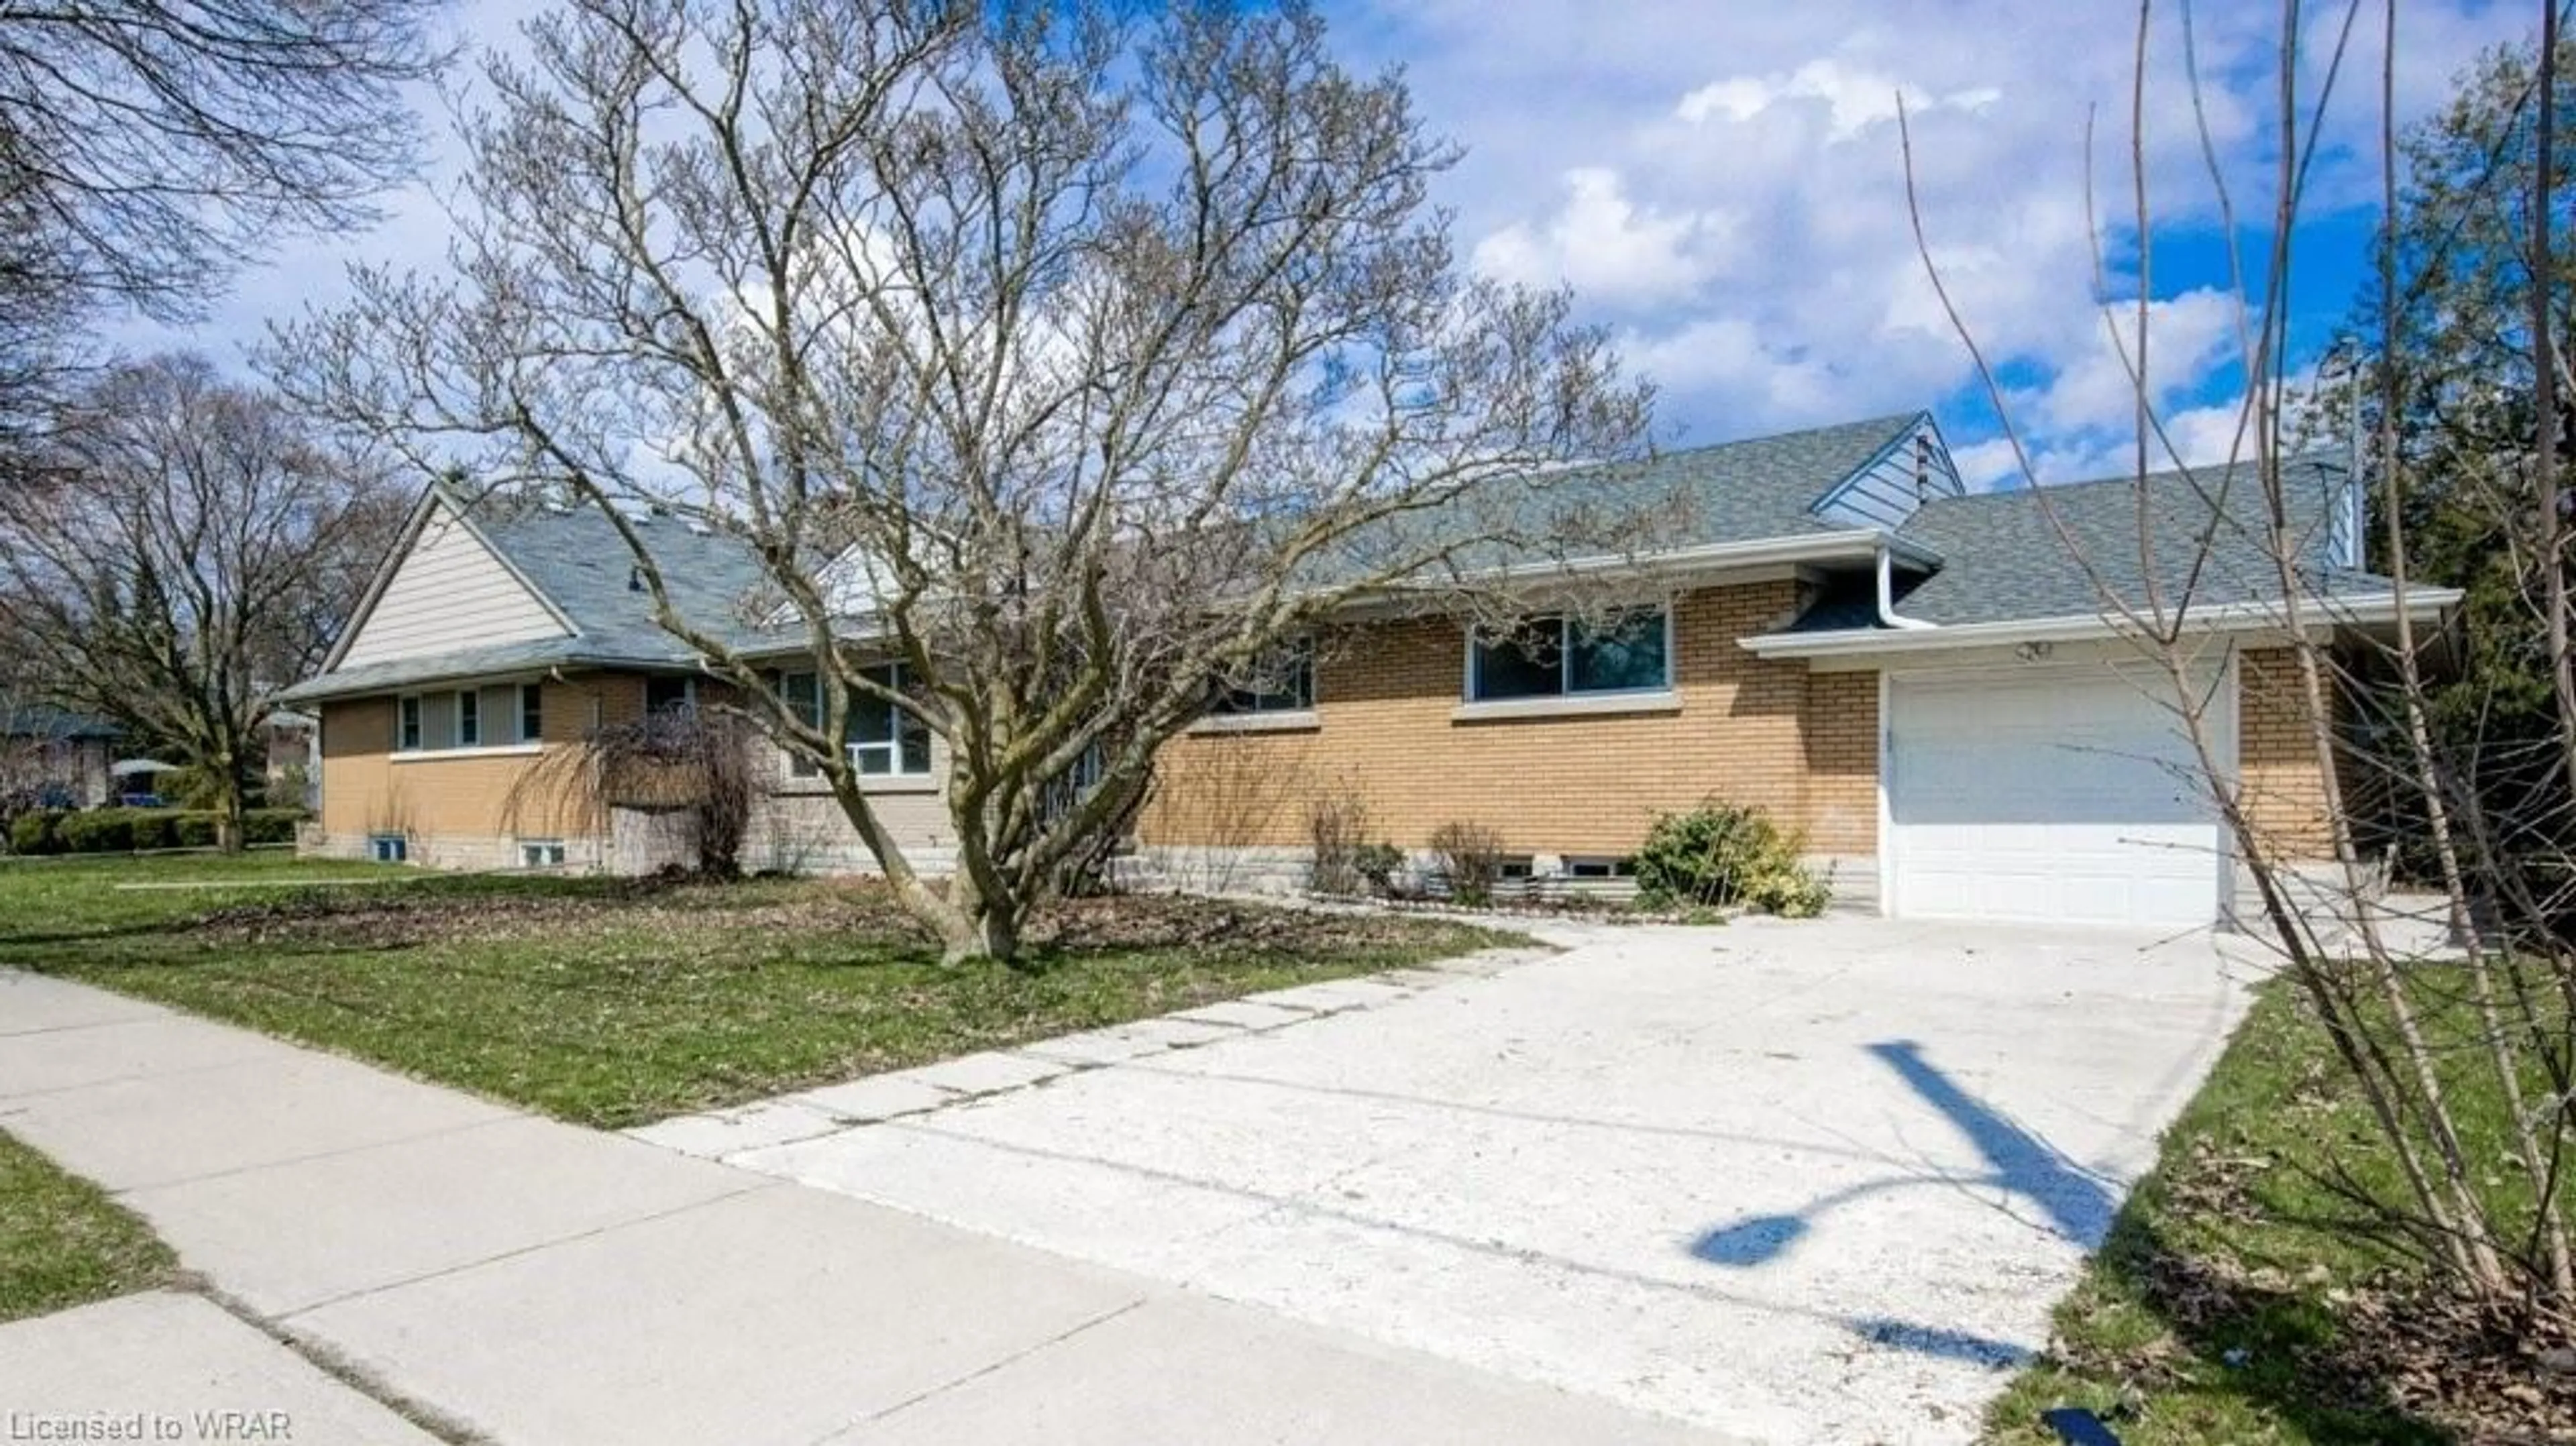 Frontside or backside of a home for 190 Melrose Ave, Kitchener Ontario N2H 2C1